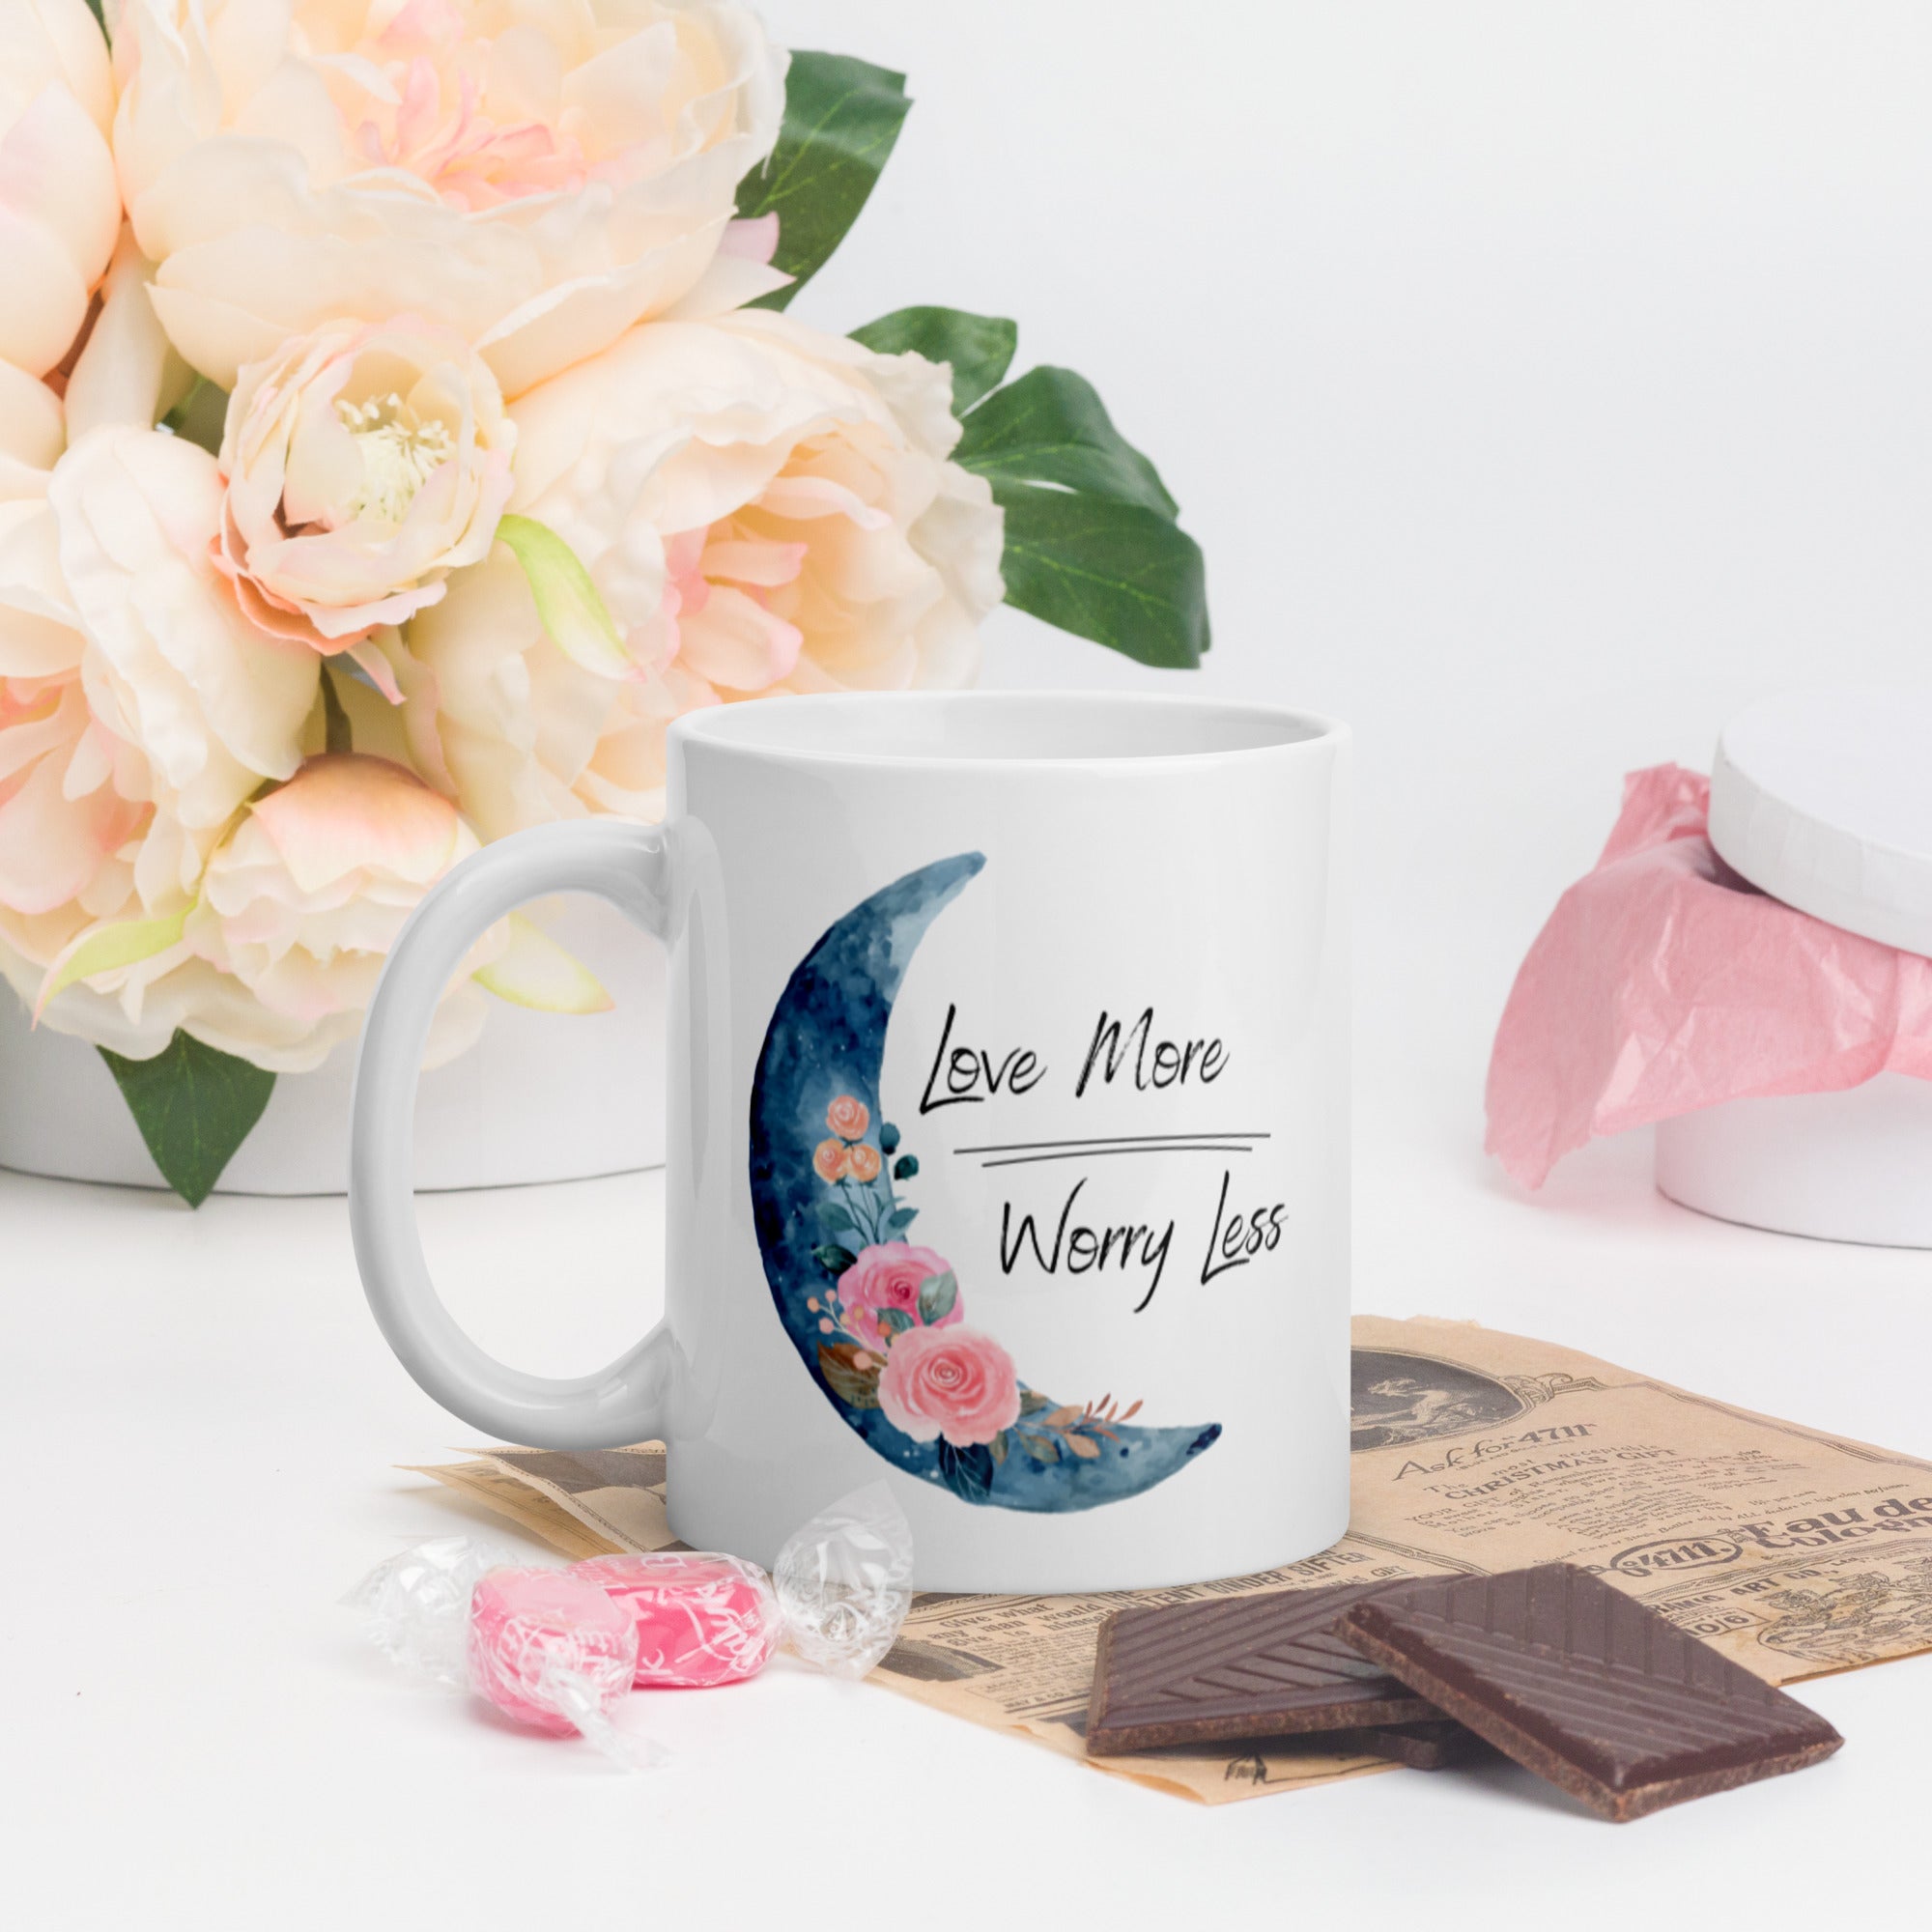 Love More, Worry Less - White Glossy Mug